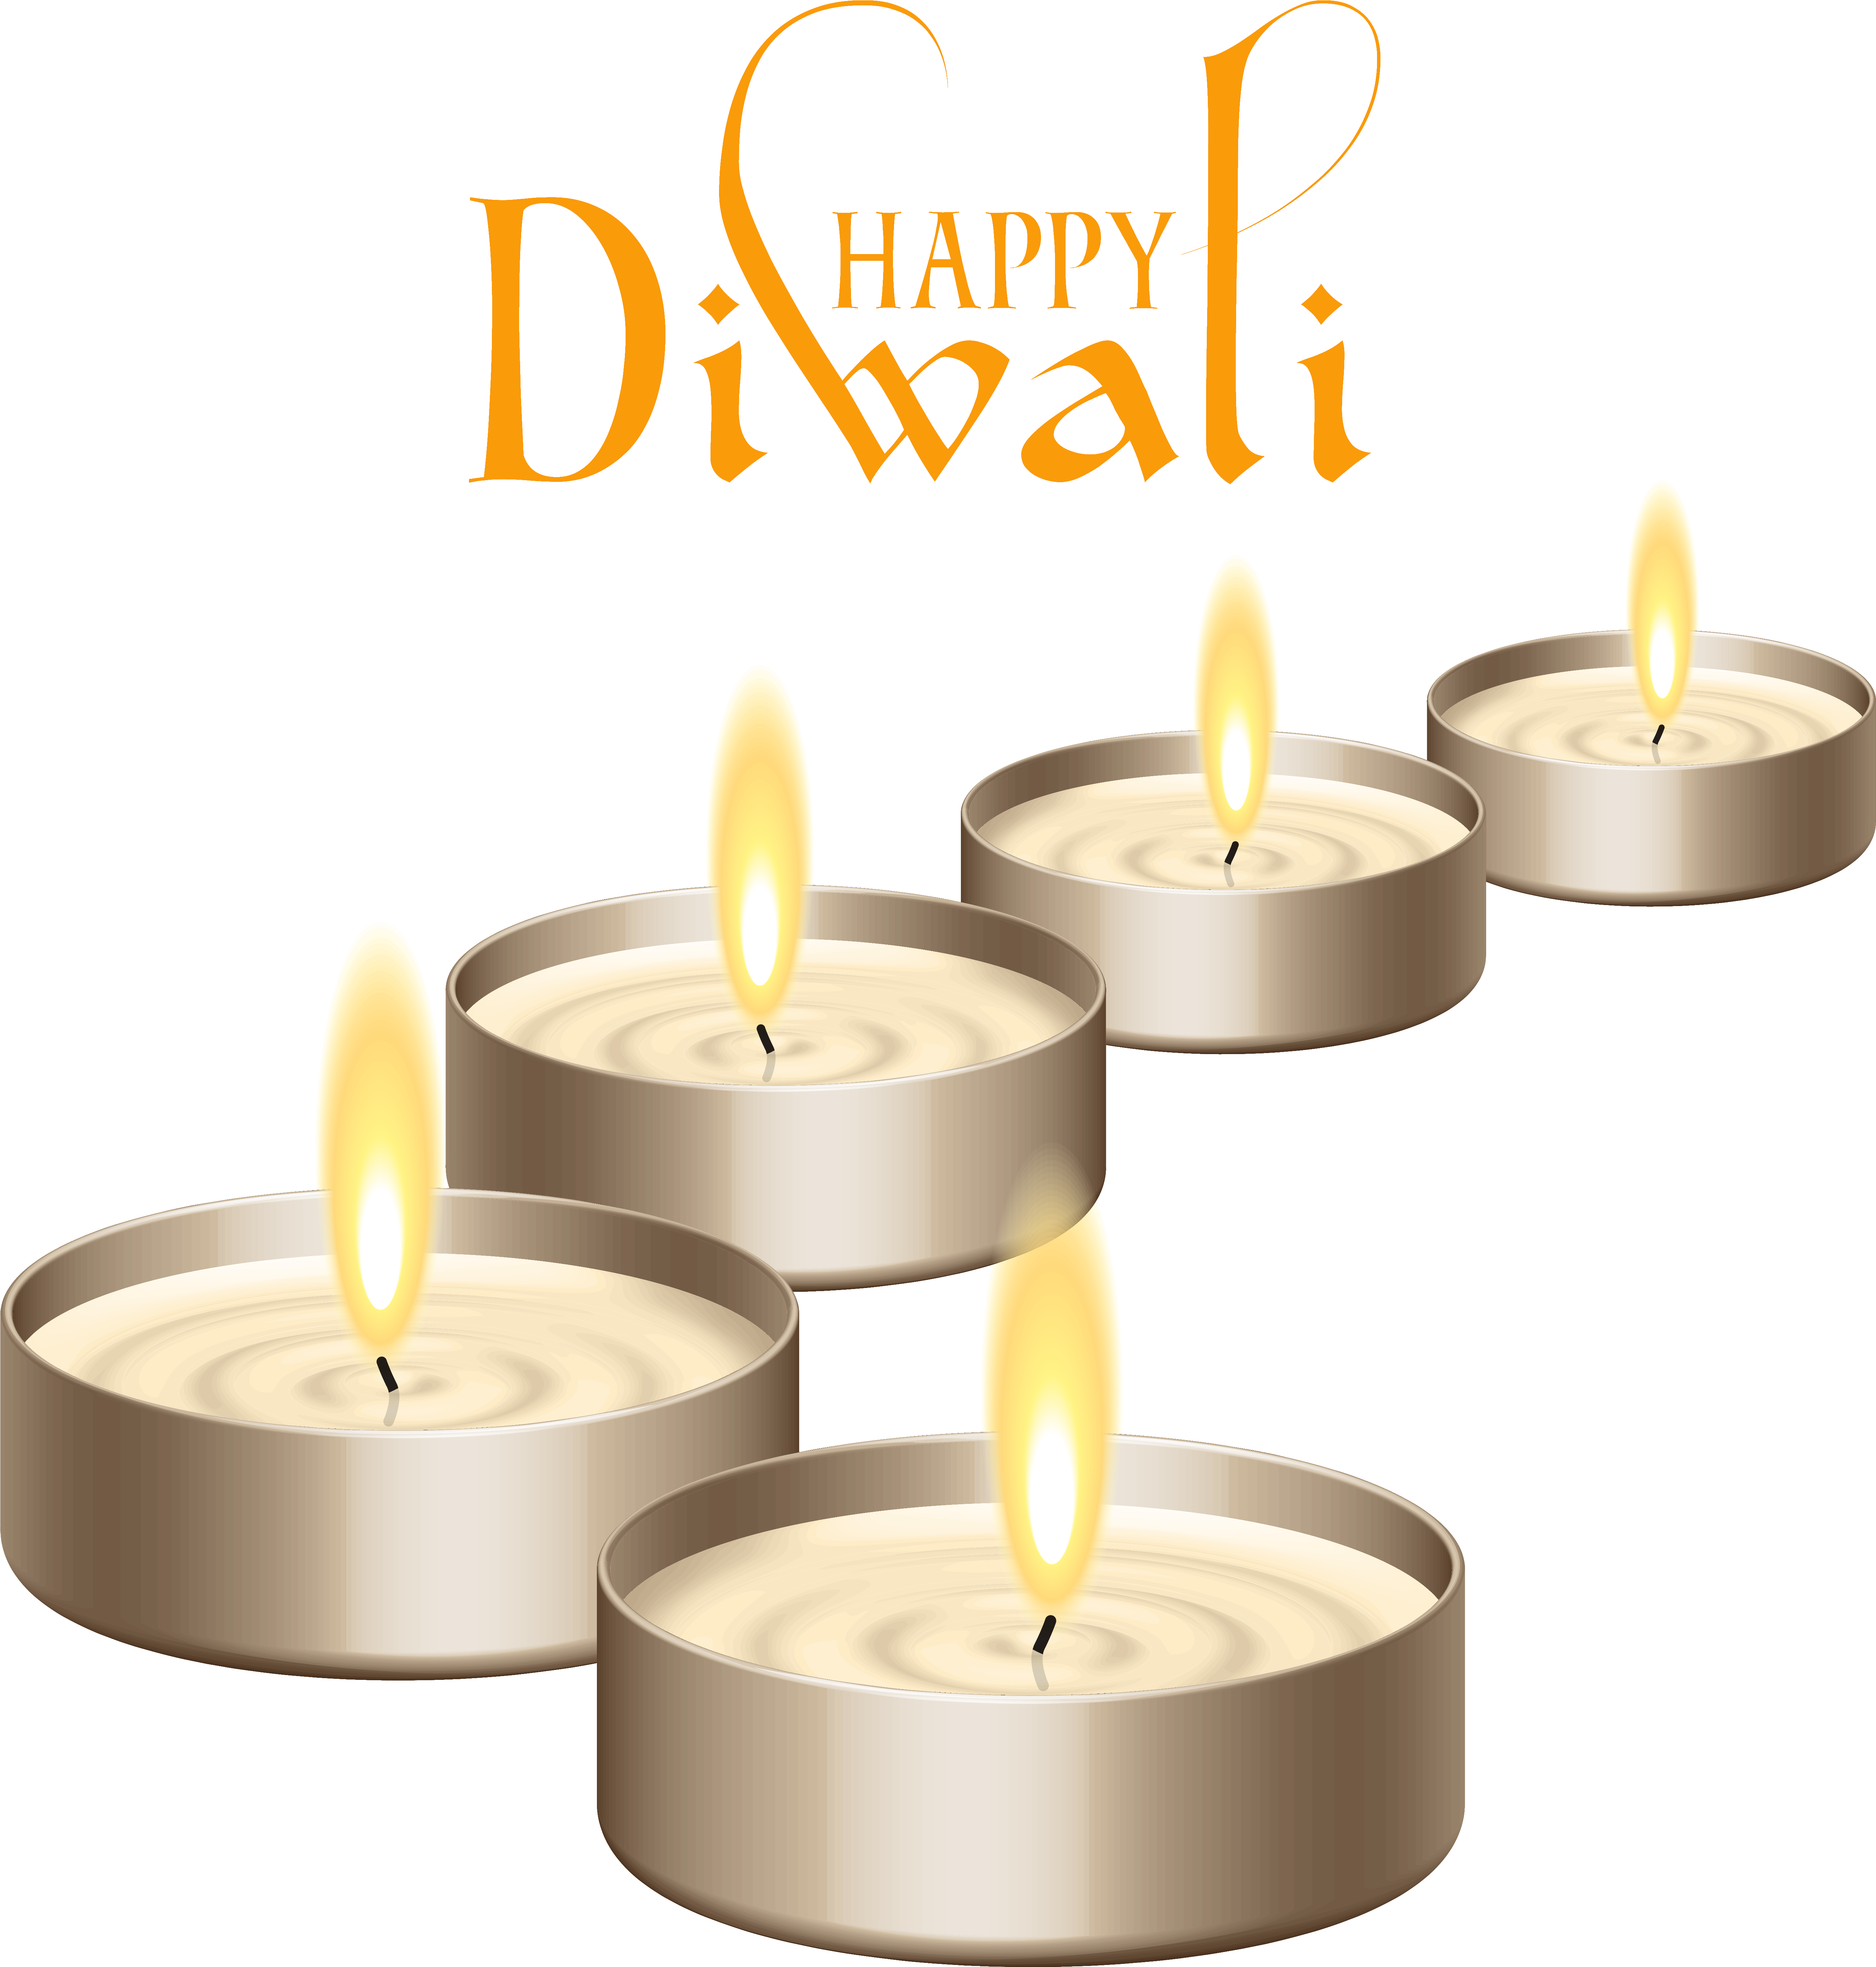 Happy Diwali Celebration Candles PNG image